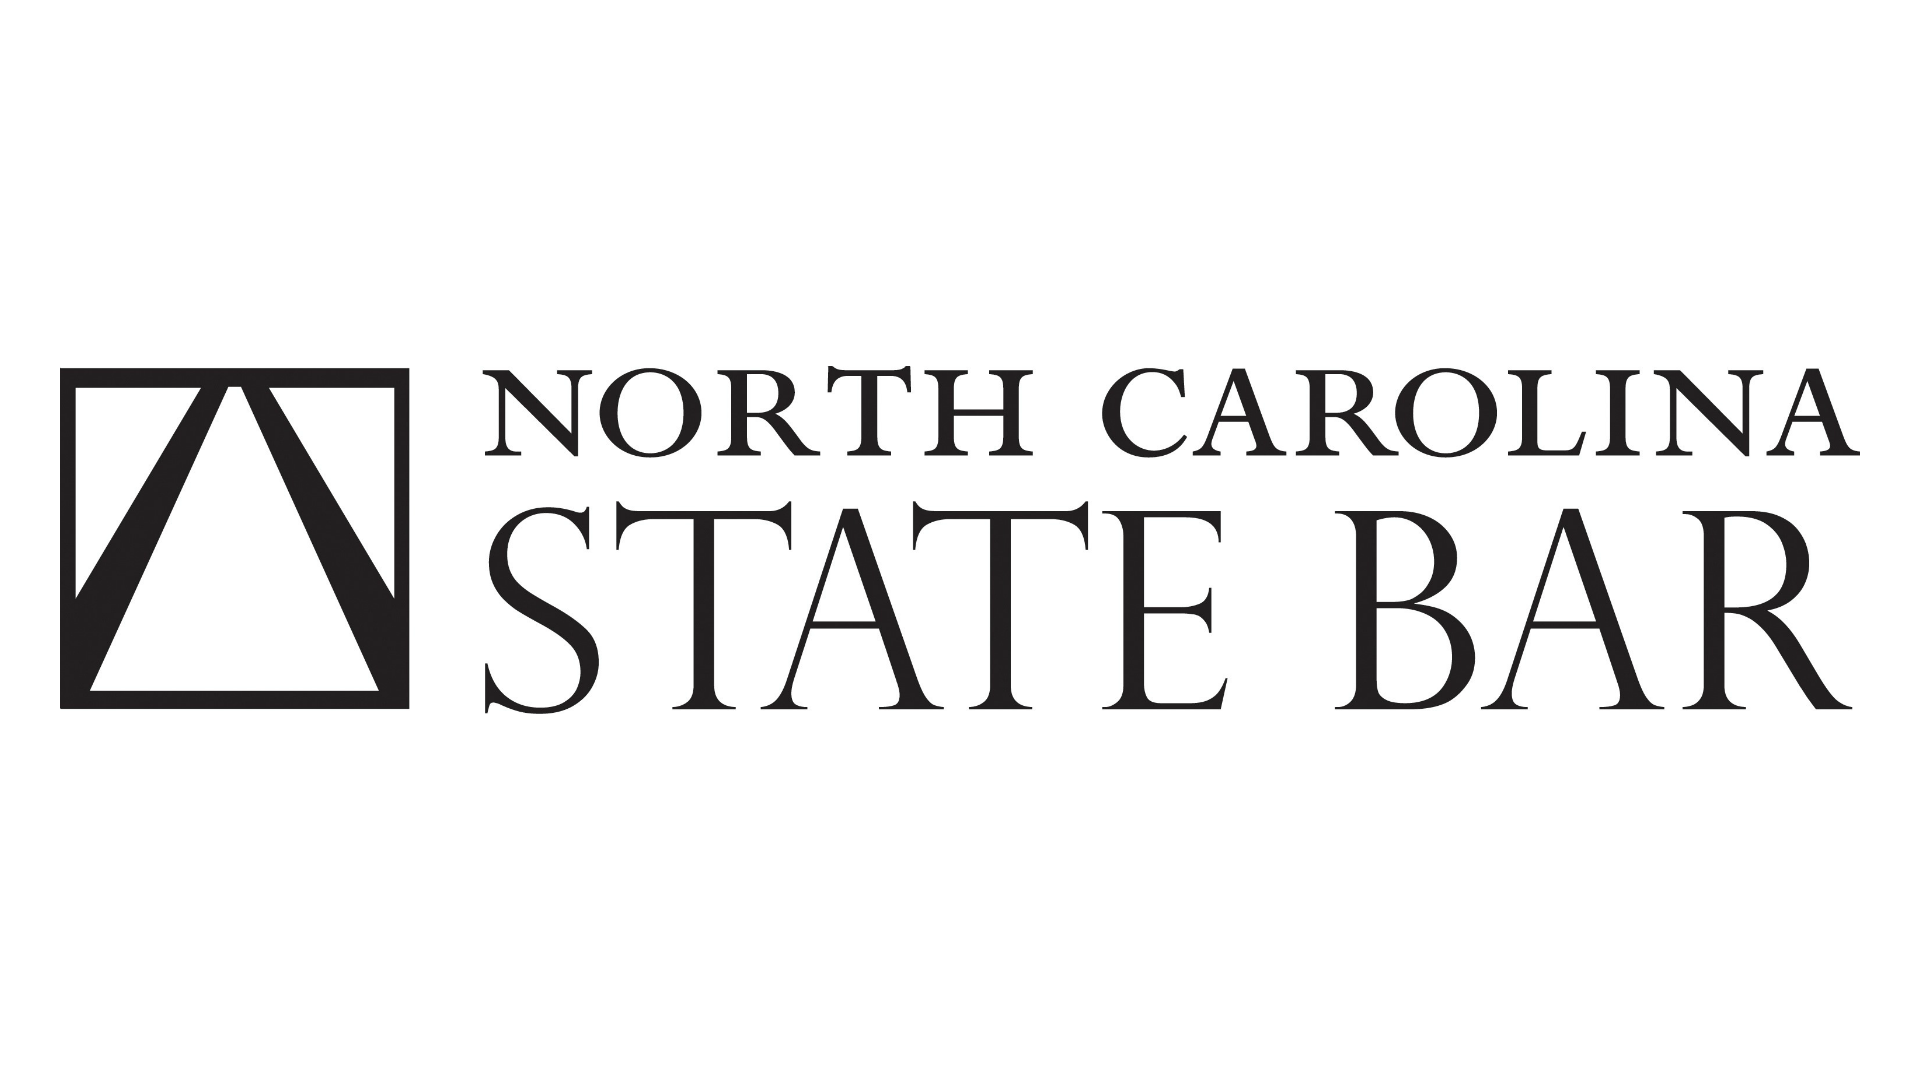 No. Carolina State Bar